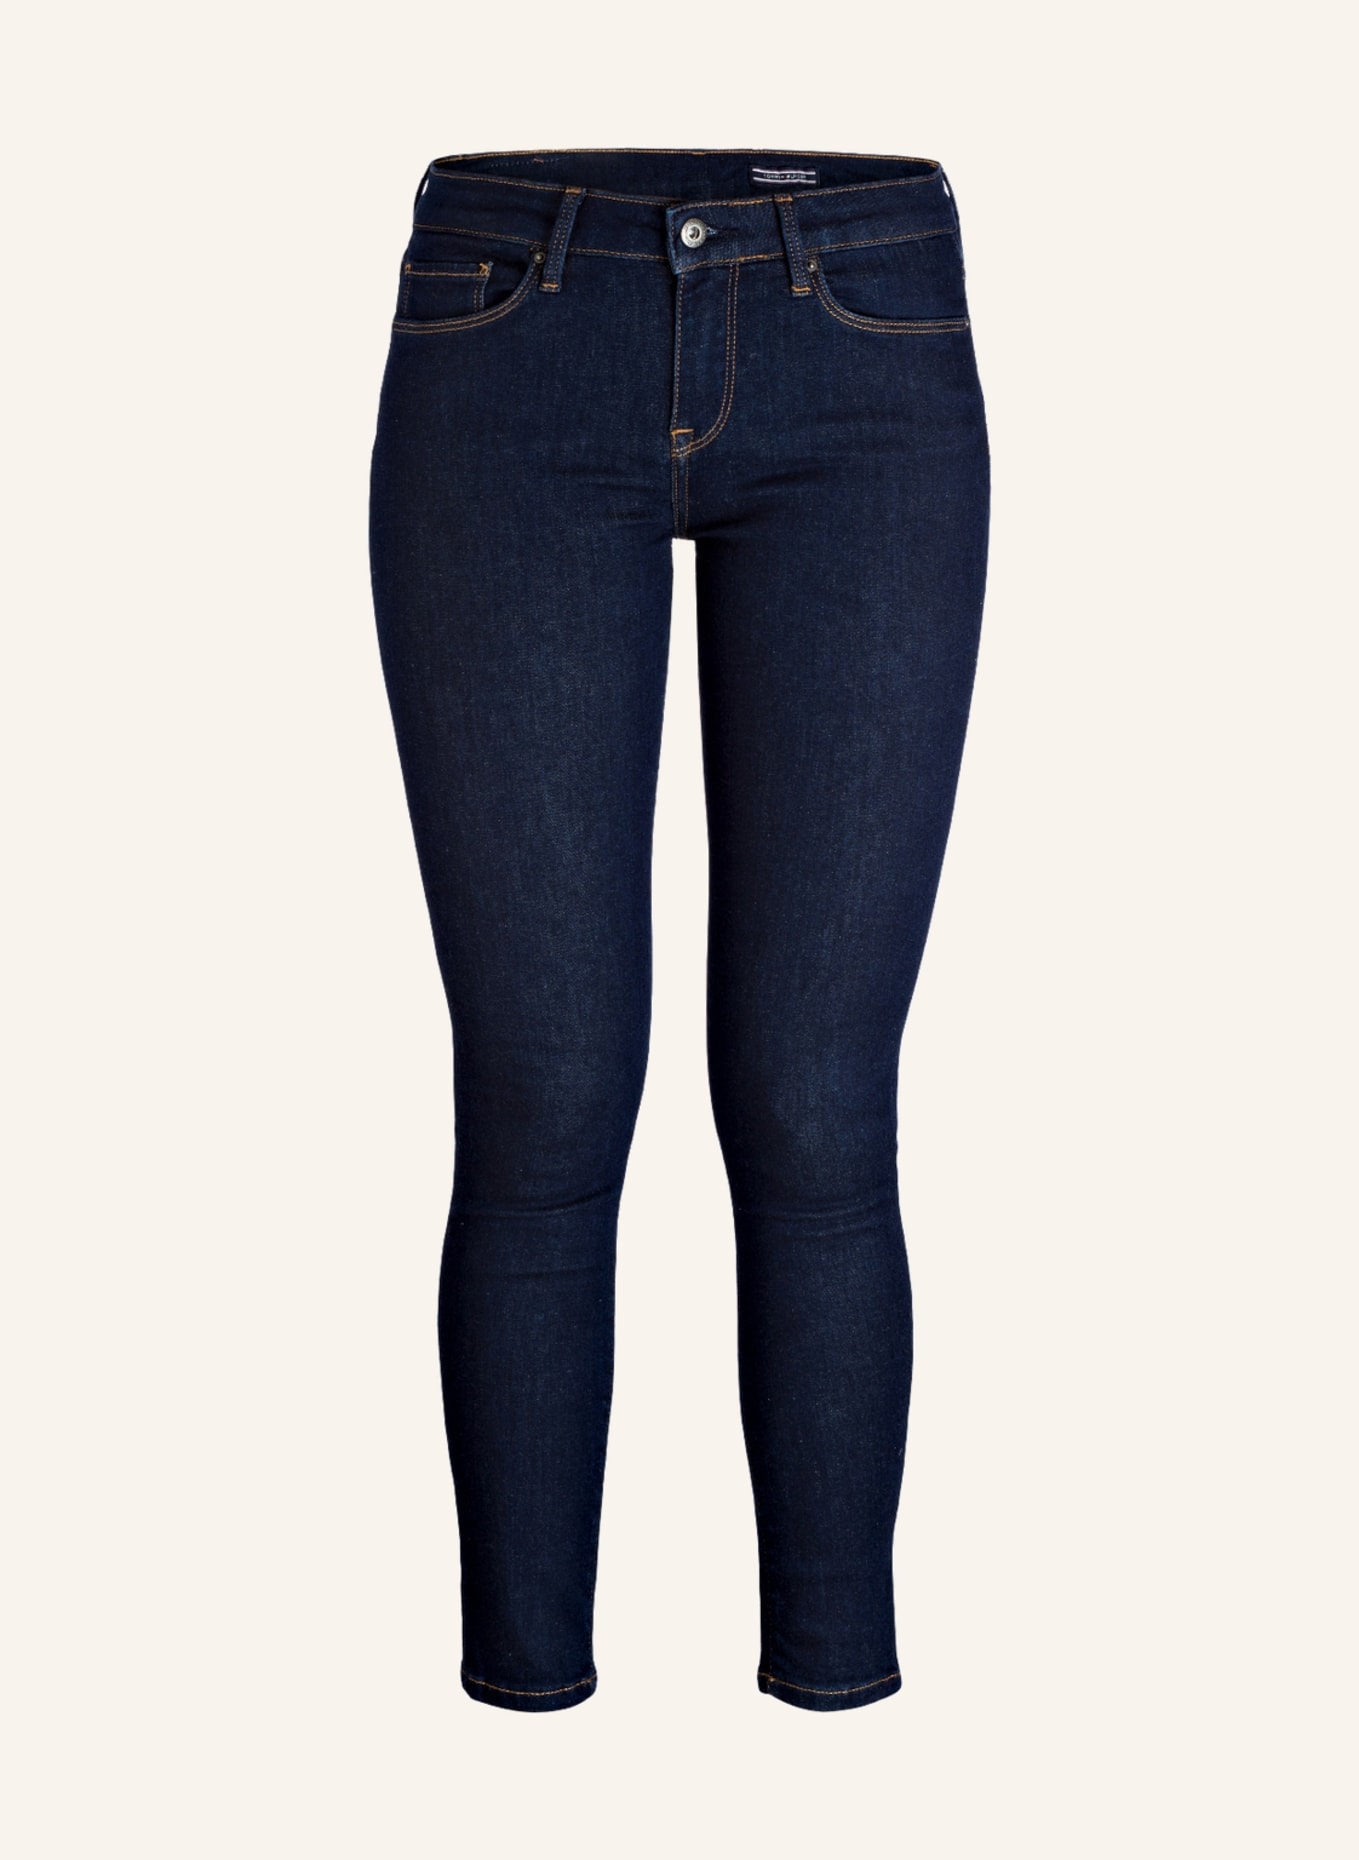 TOMMY HILFIGER Skinny Jeans COMO , Farbe: 727 STEFFI DARK BLUE (Bild 1)